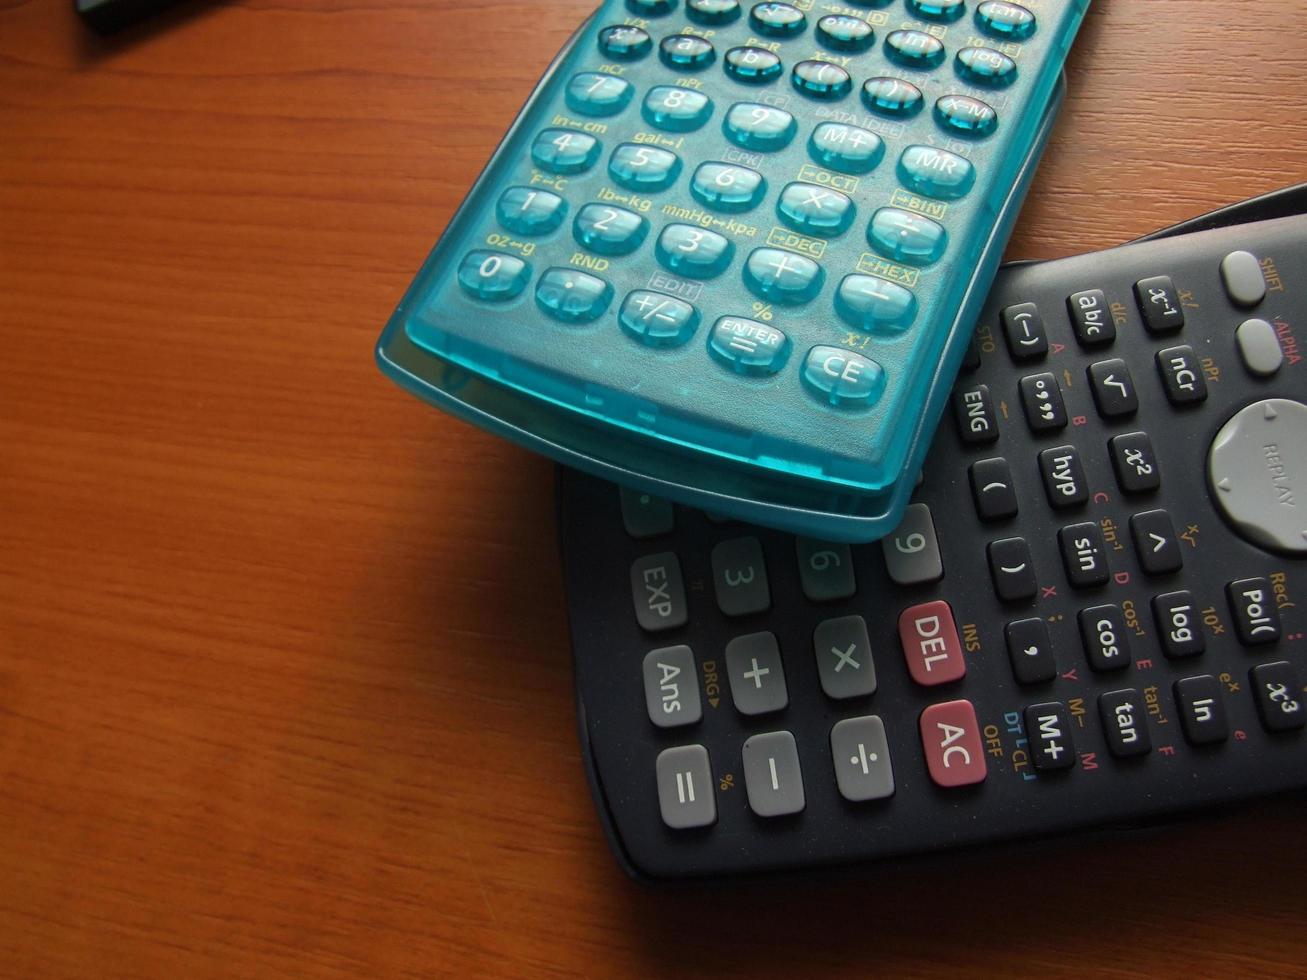 Calculator on table photo